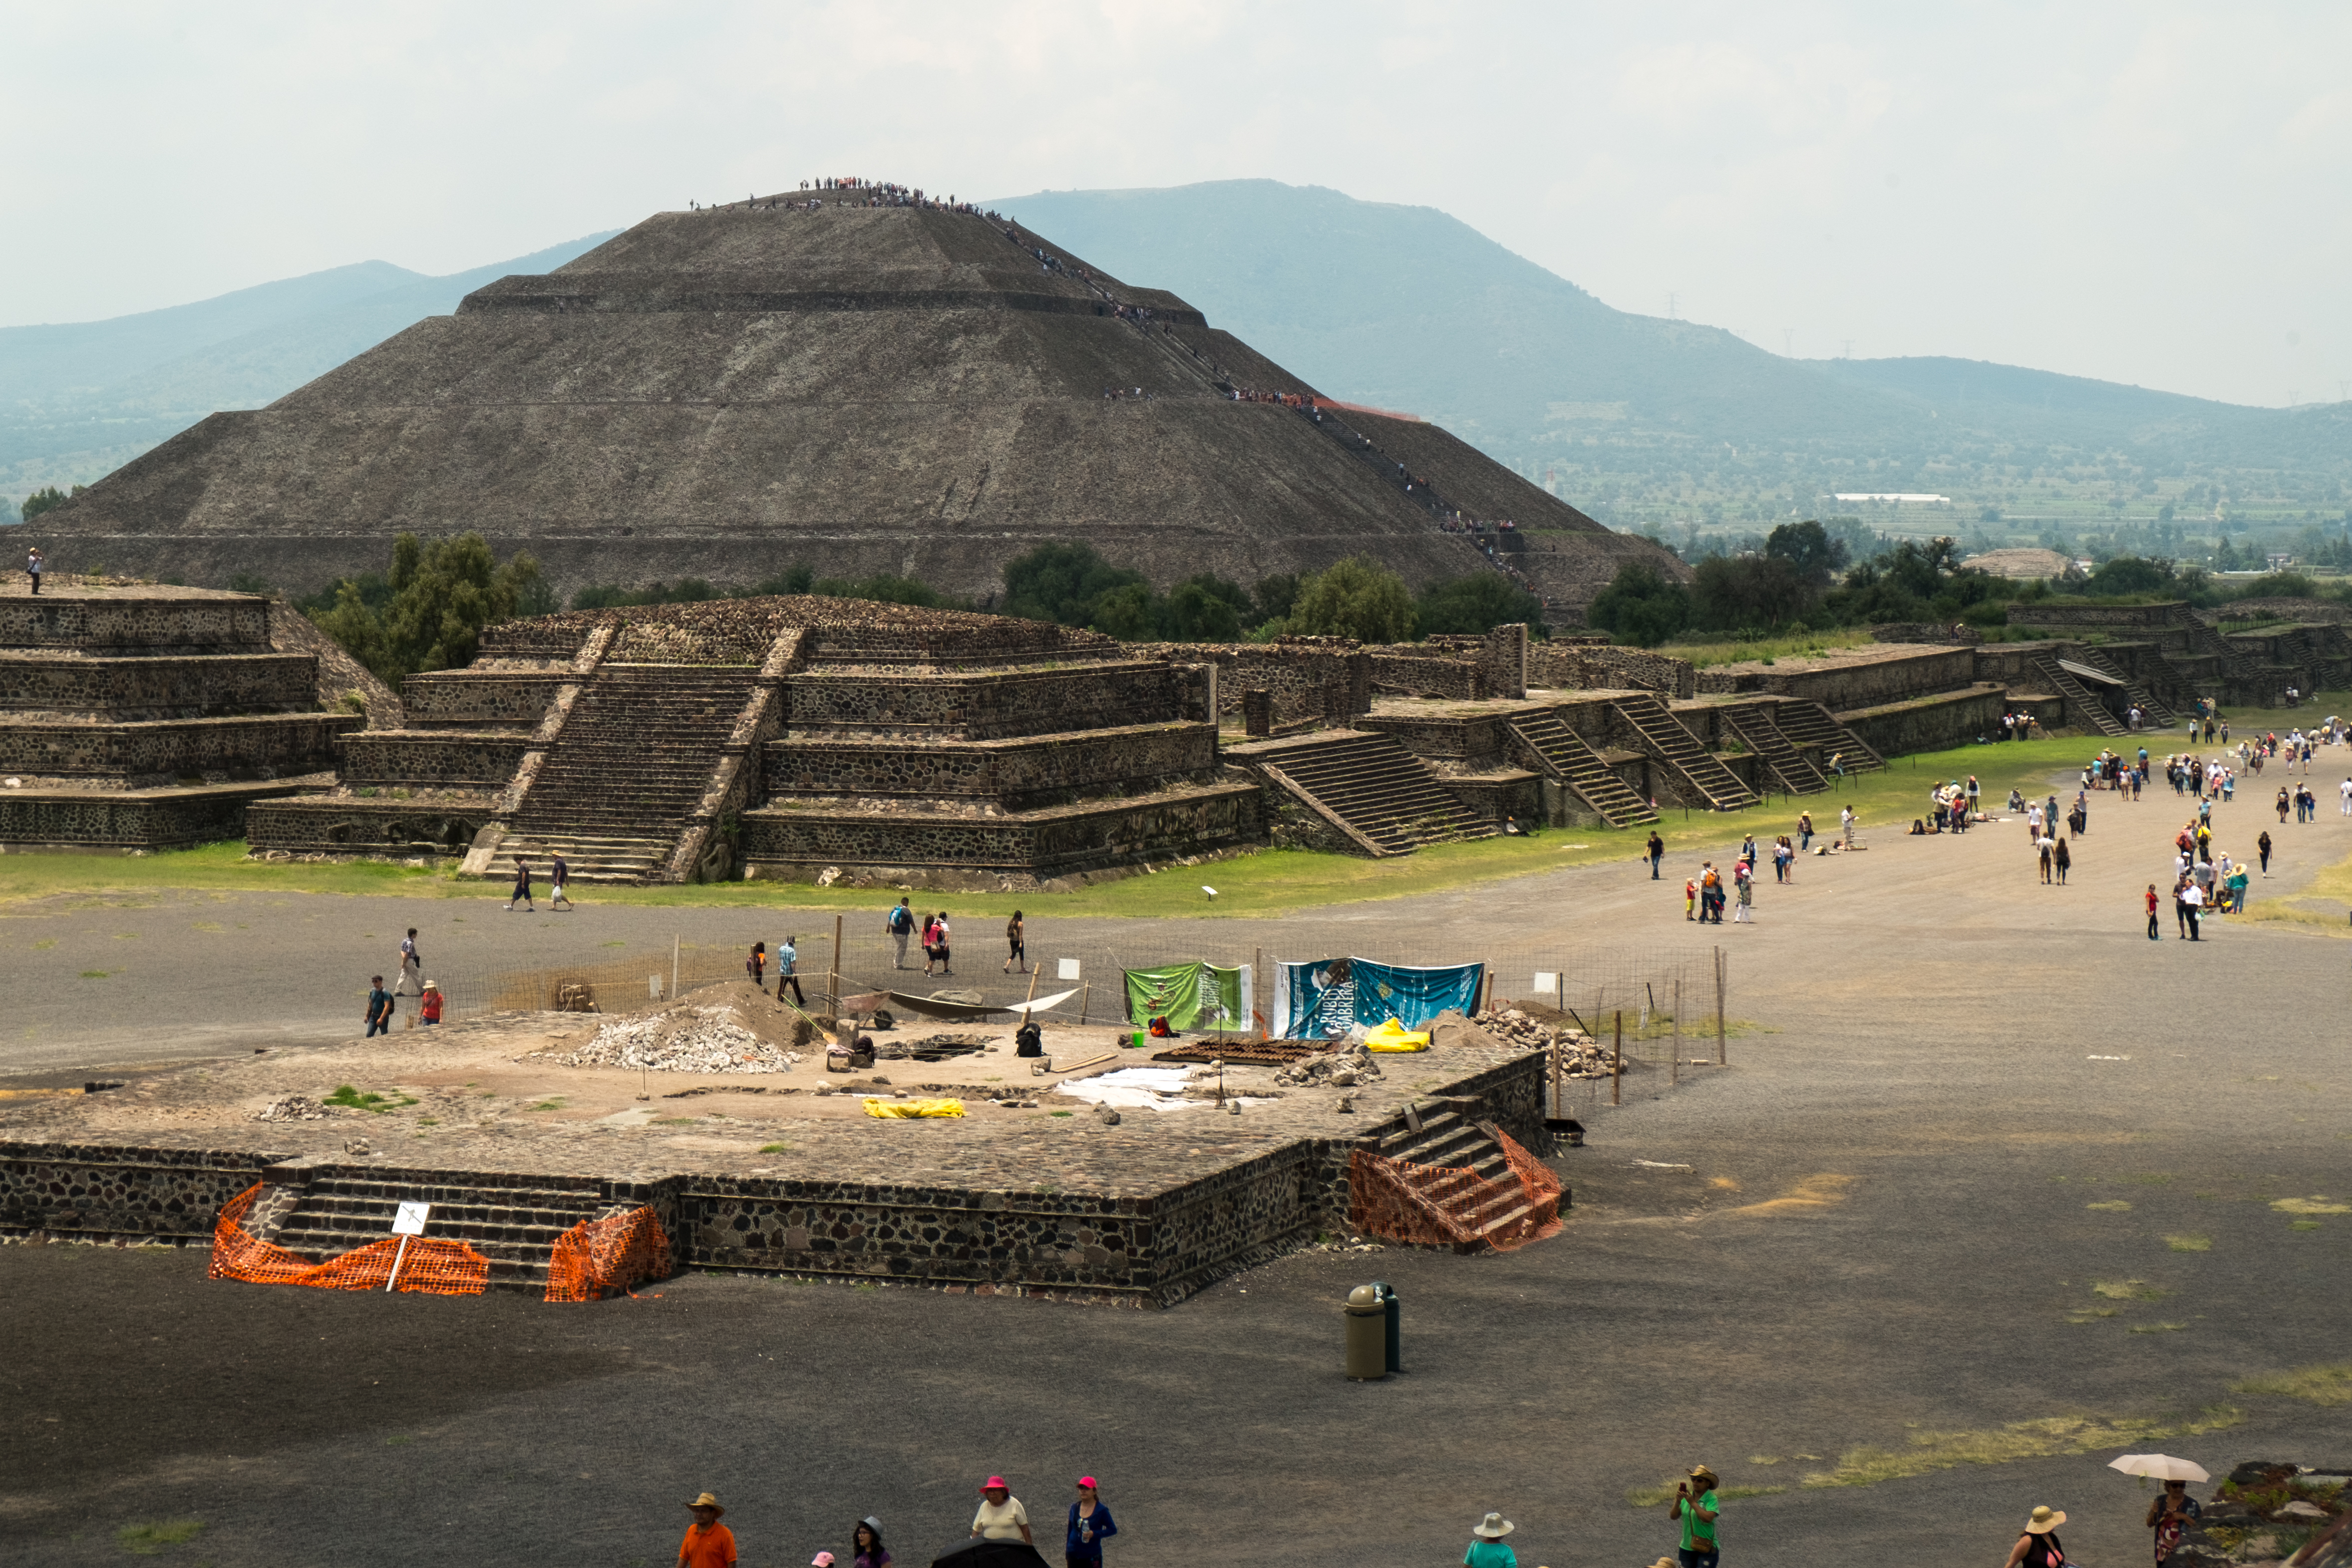 15-07-20-Teotihuacán-RalfR-DSCF6629